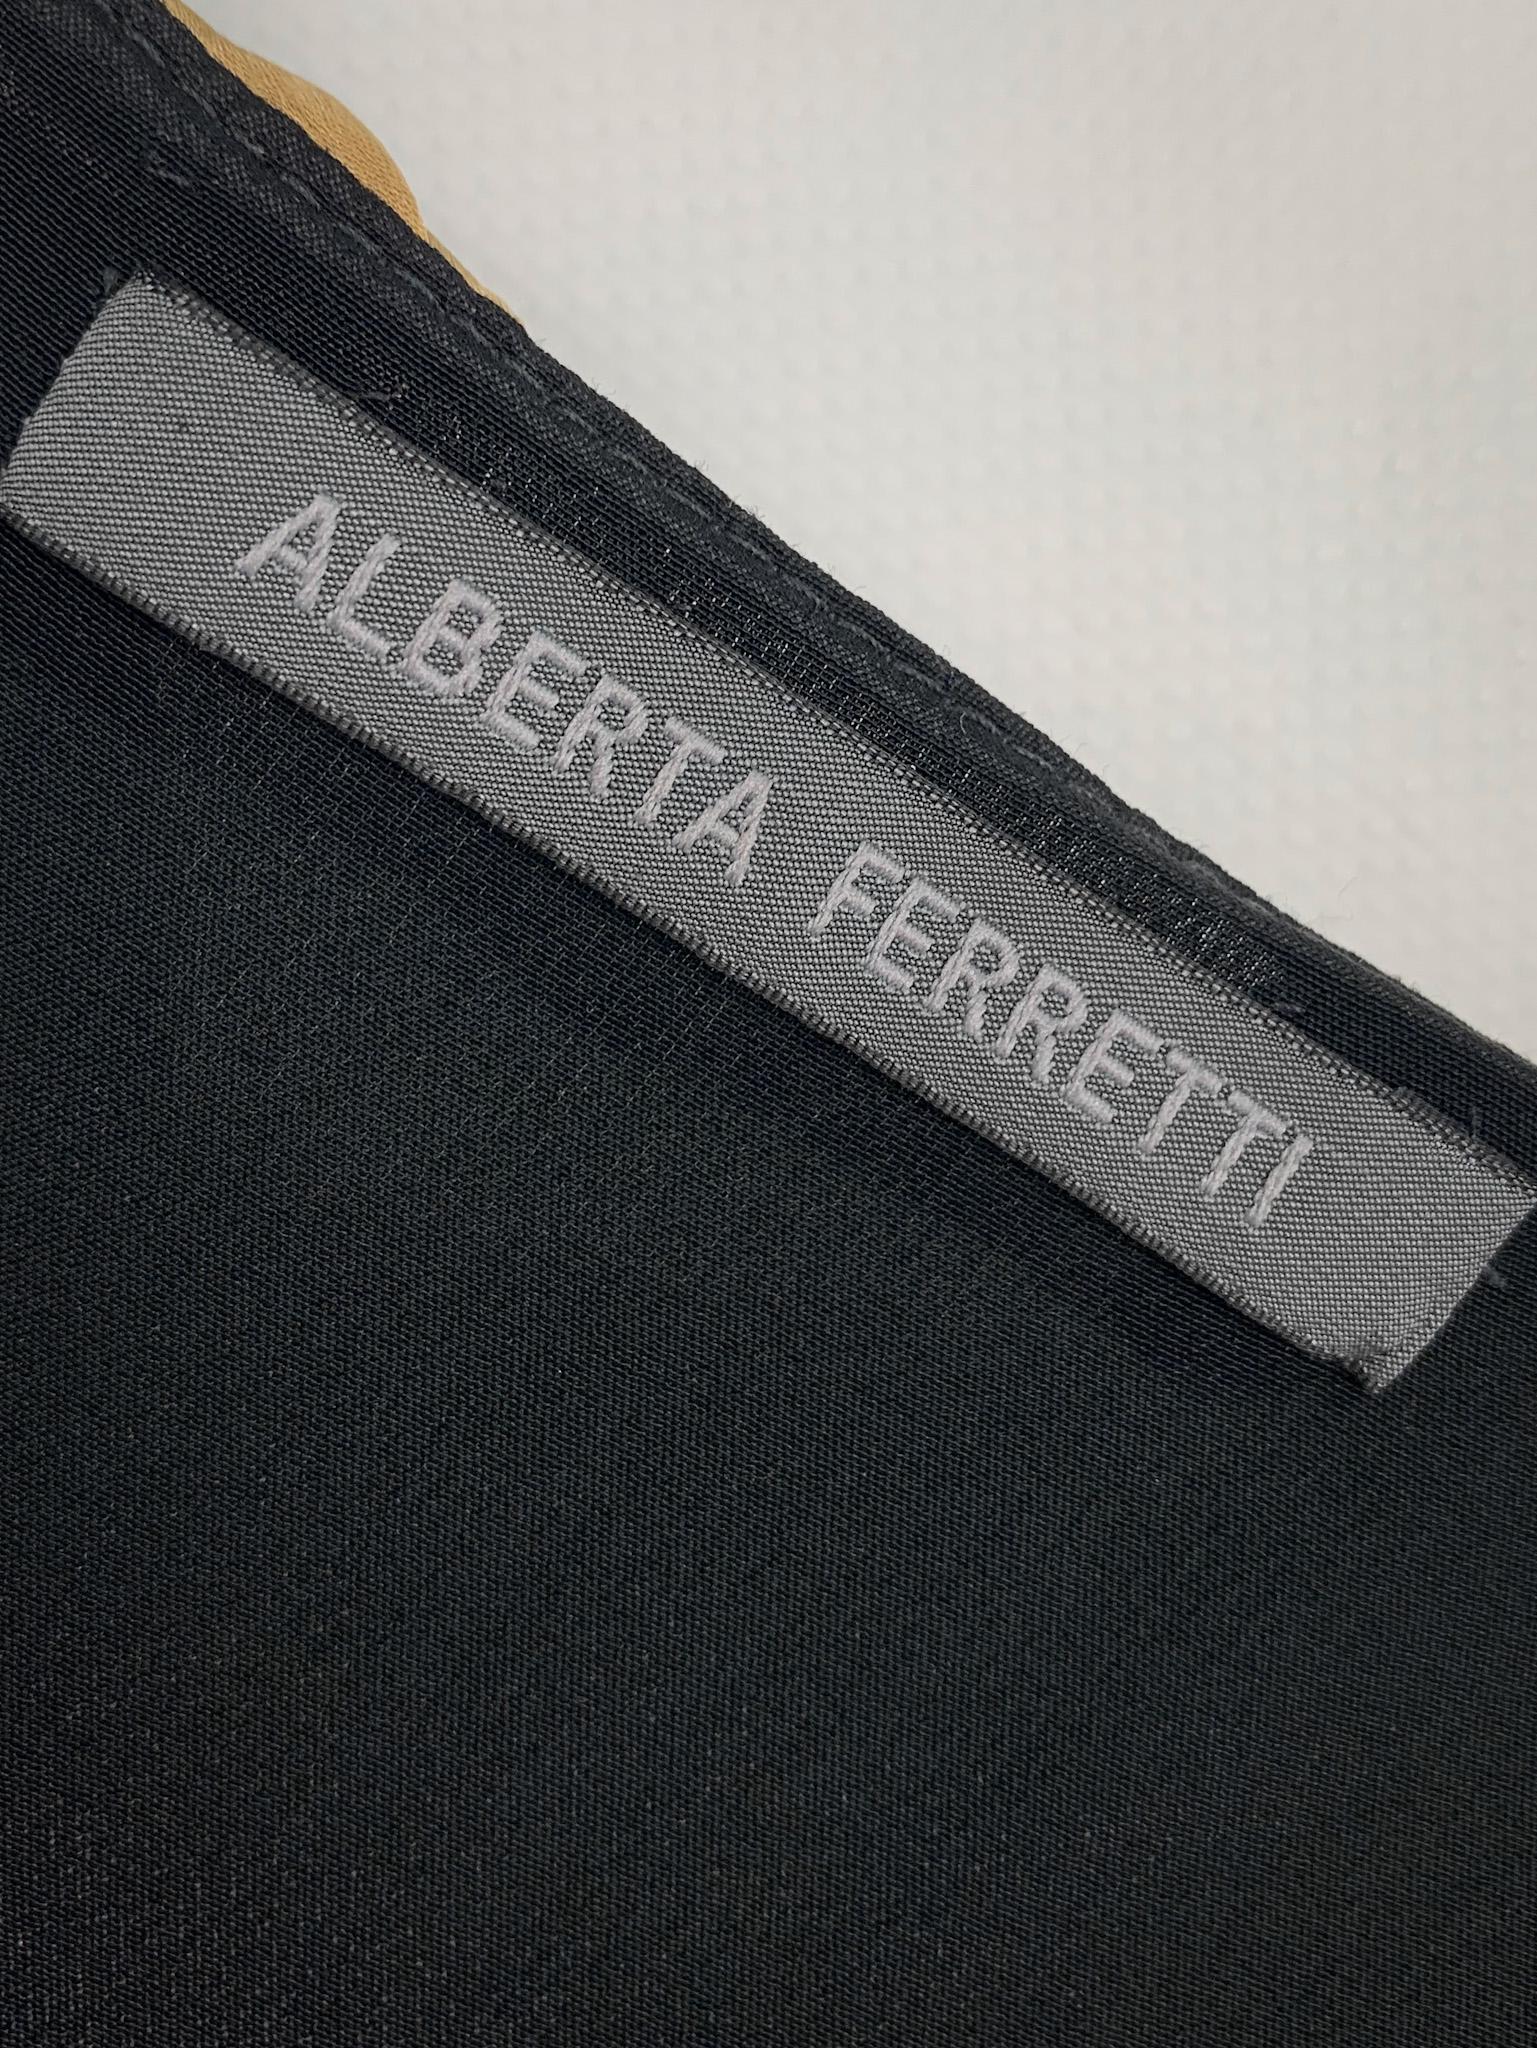 Alberta Ferretti Runway 2016 Ombré Silk Embellished Embroidered Cocktail Dress 6